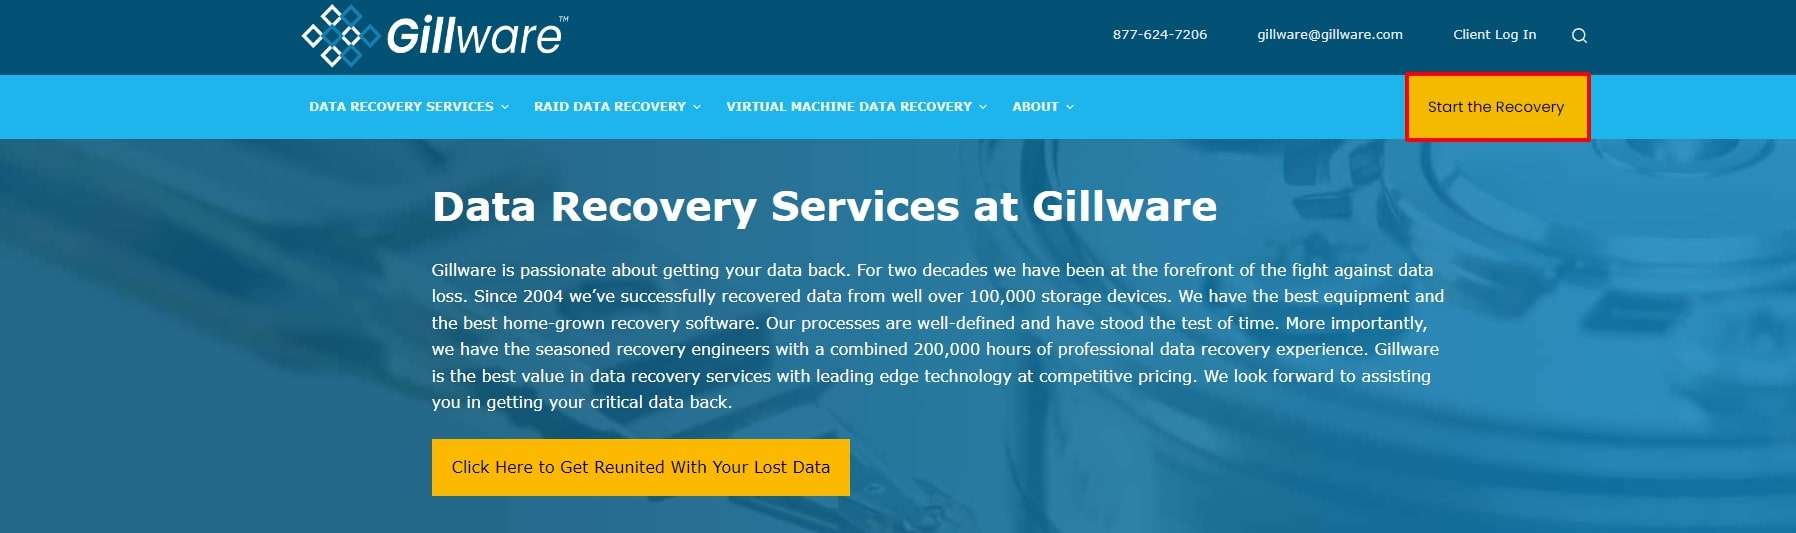 solicitud de recuperación de datos de gillware 